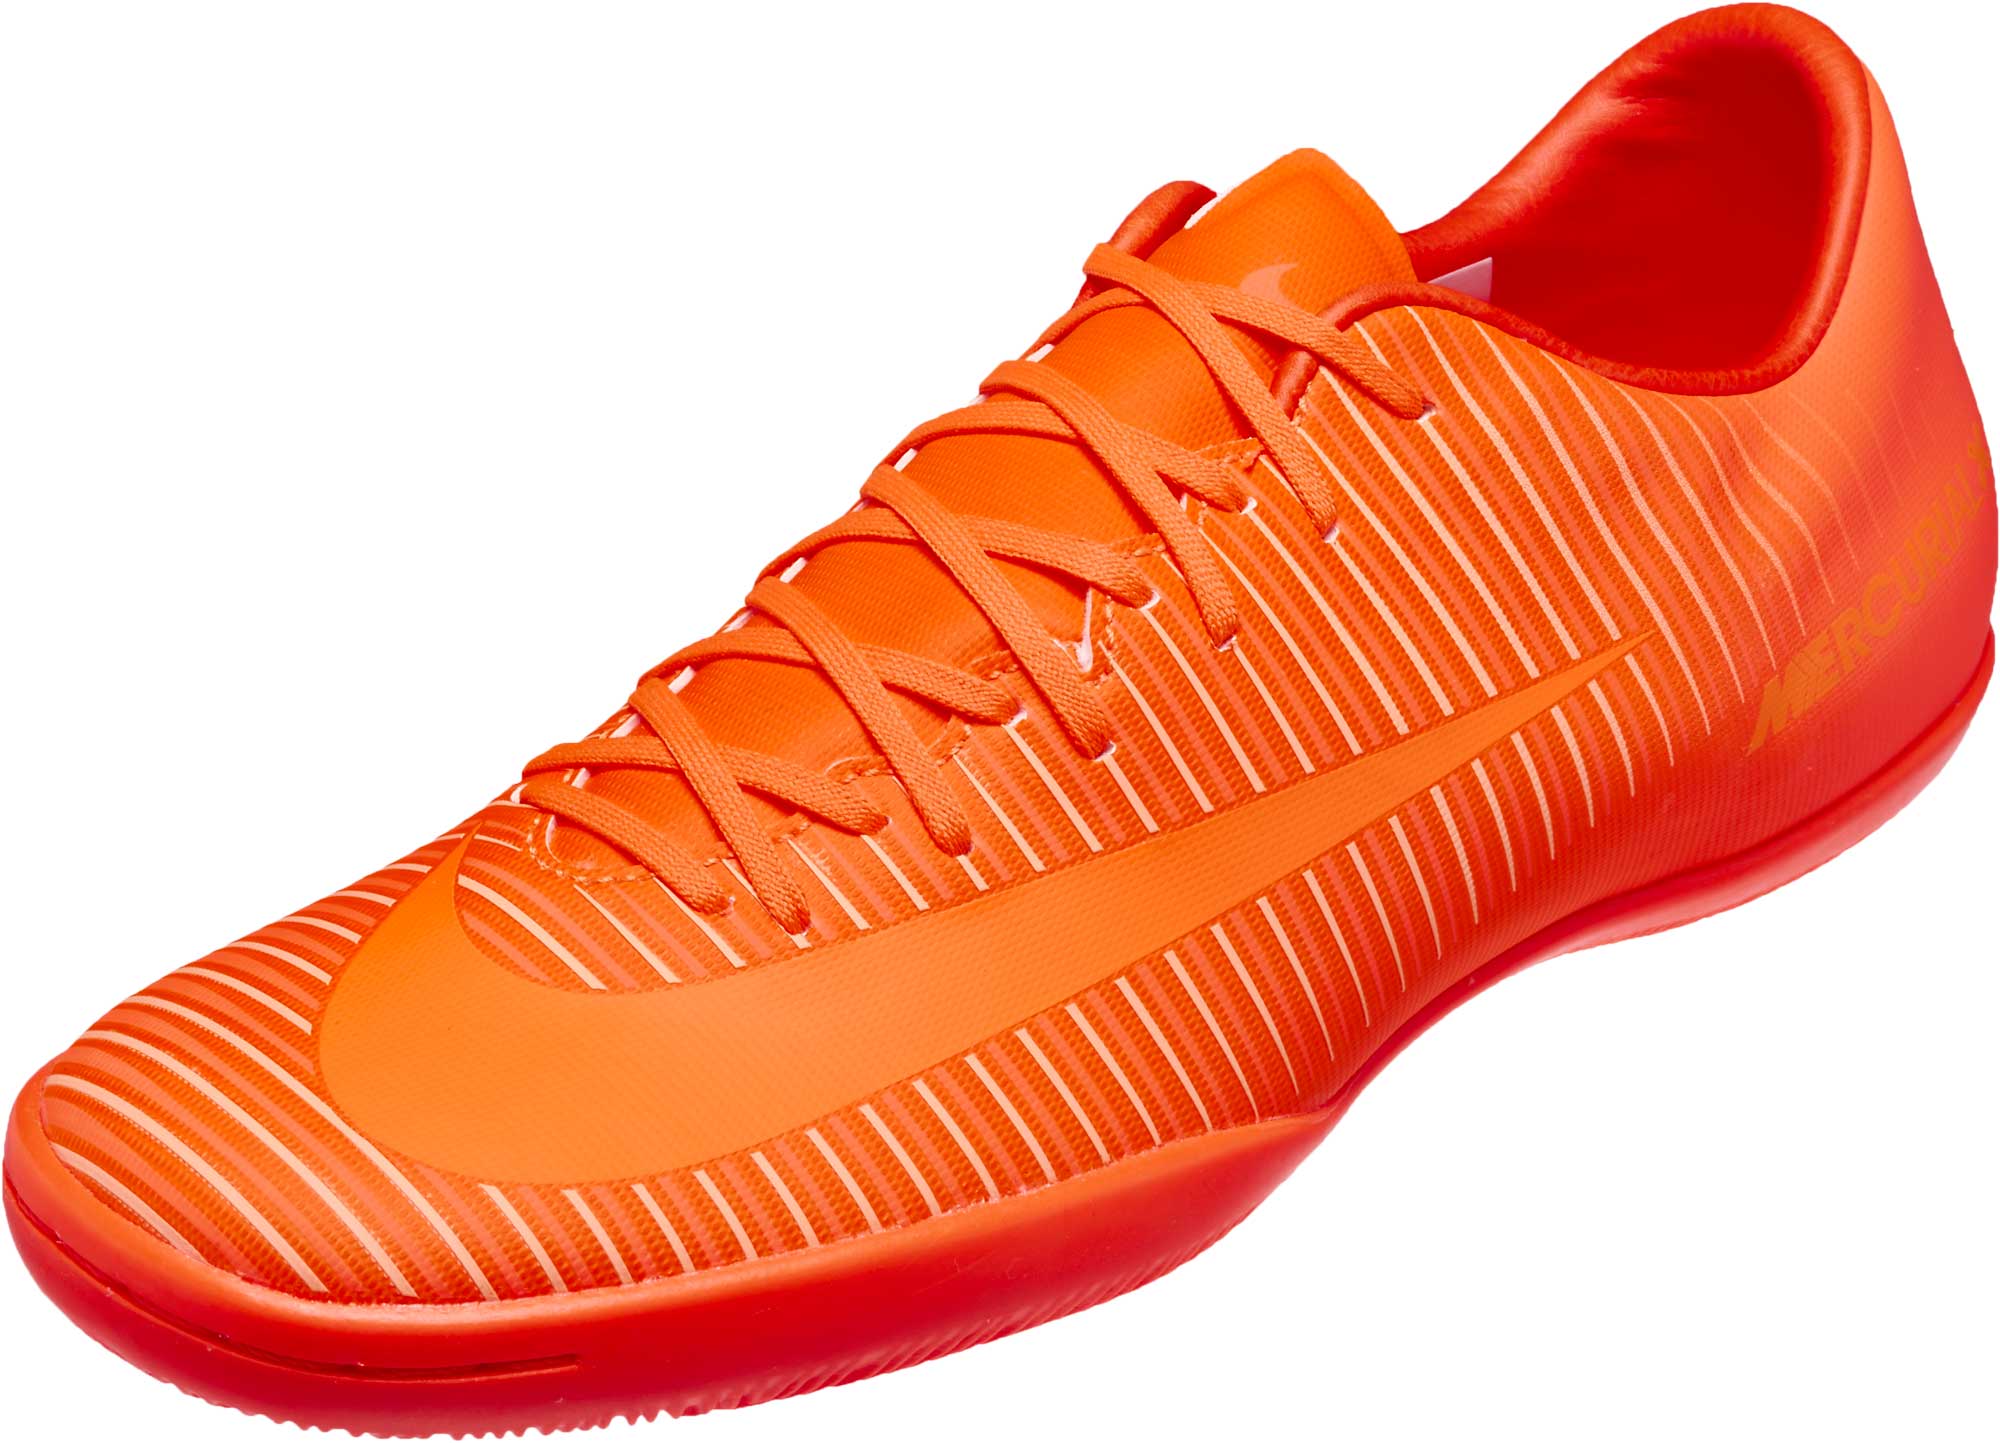 nike indoor soccer shoes orange Cheap 